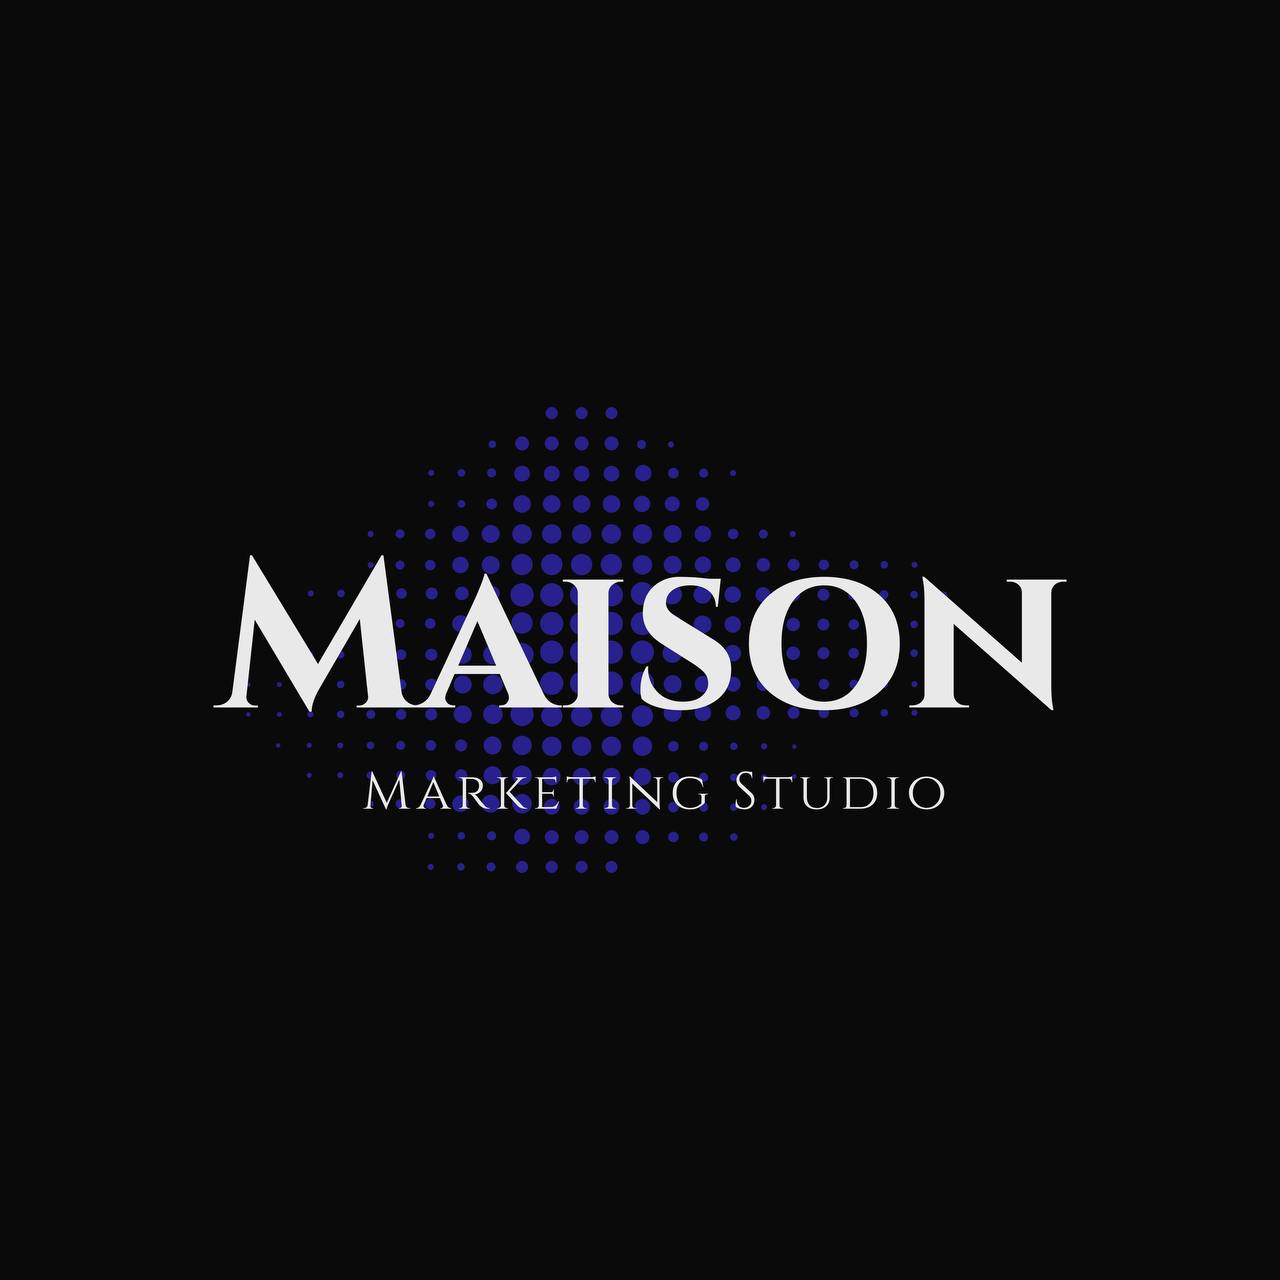 Maison Marketing Studio